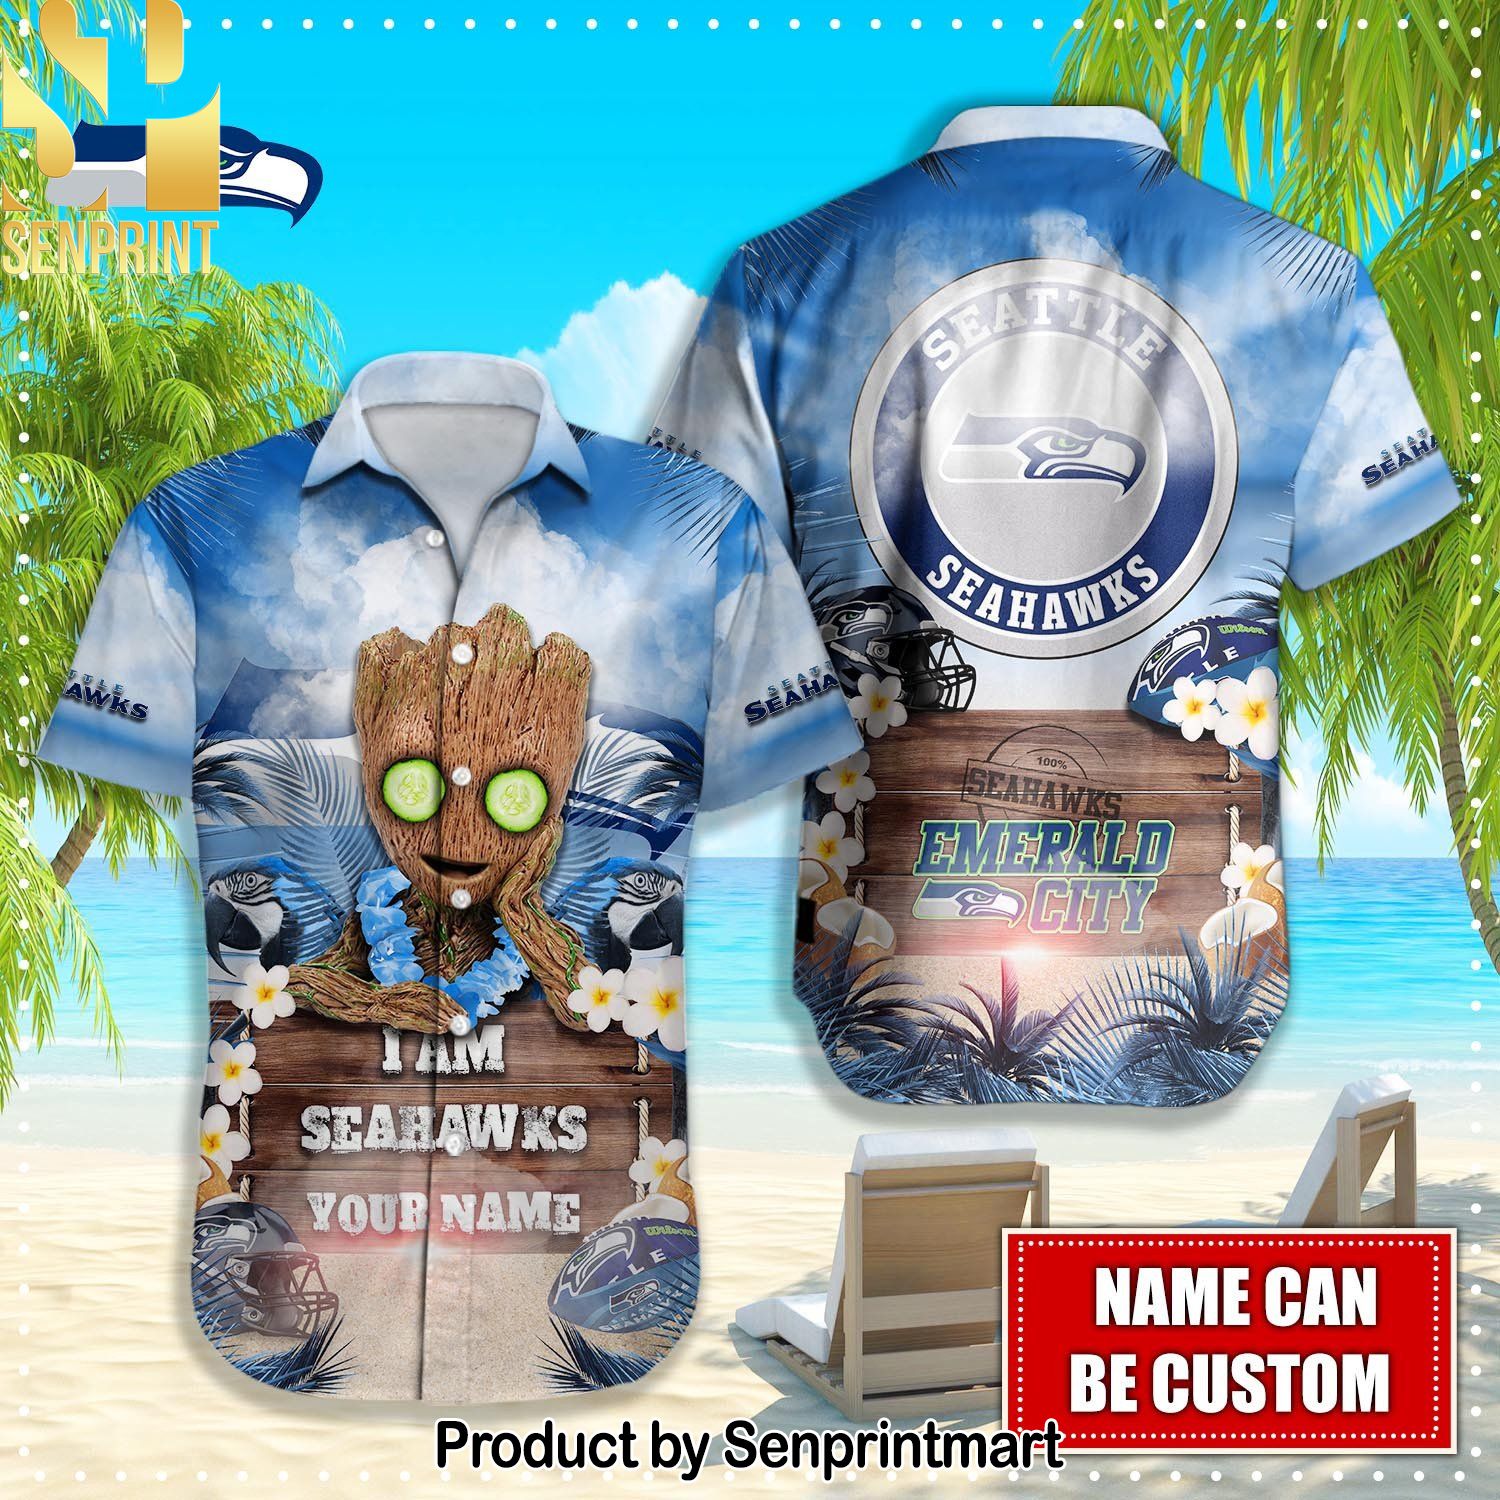 Seattle Seahawks NFL Street Style Hawaiian Shirt and Shorts